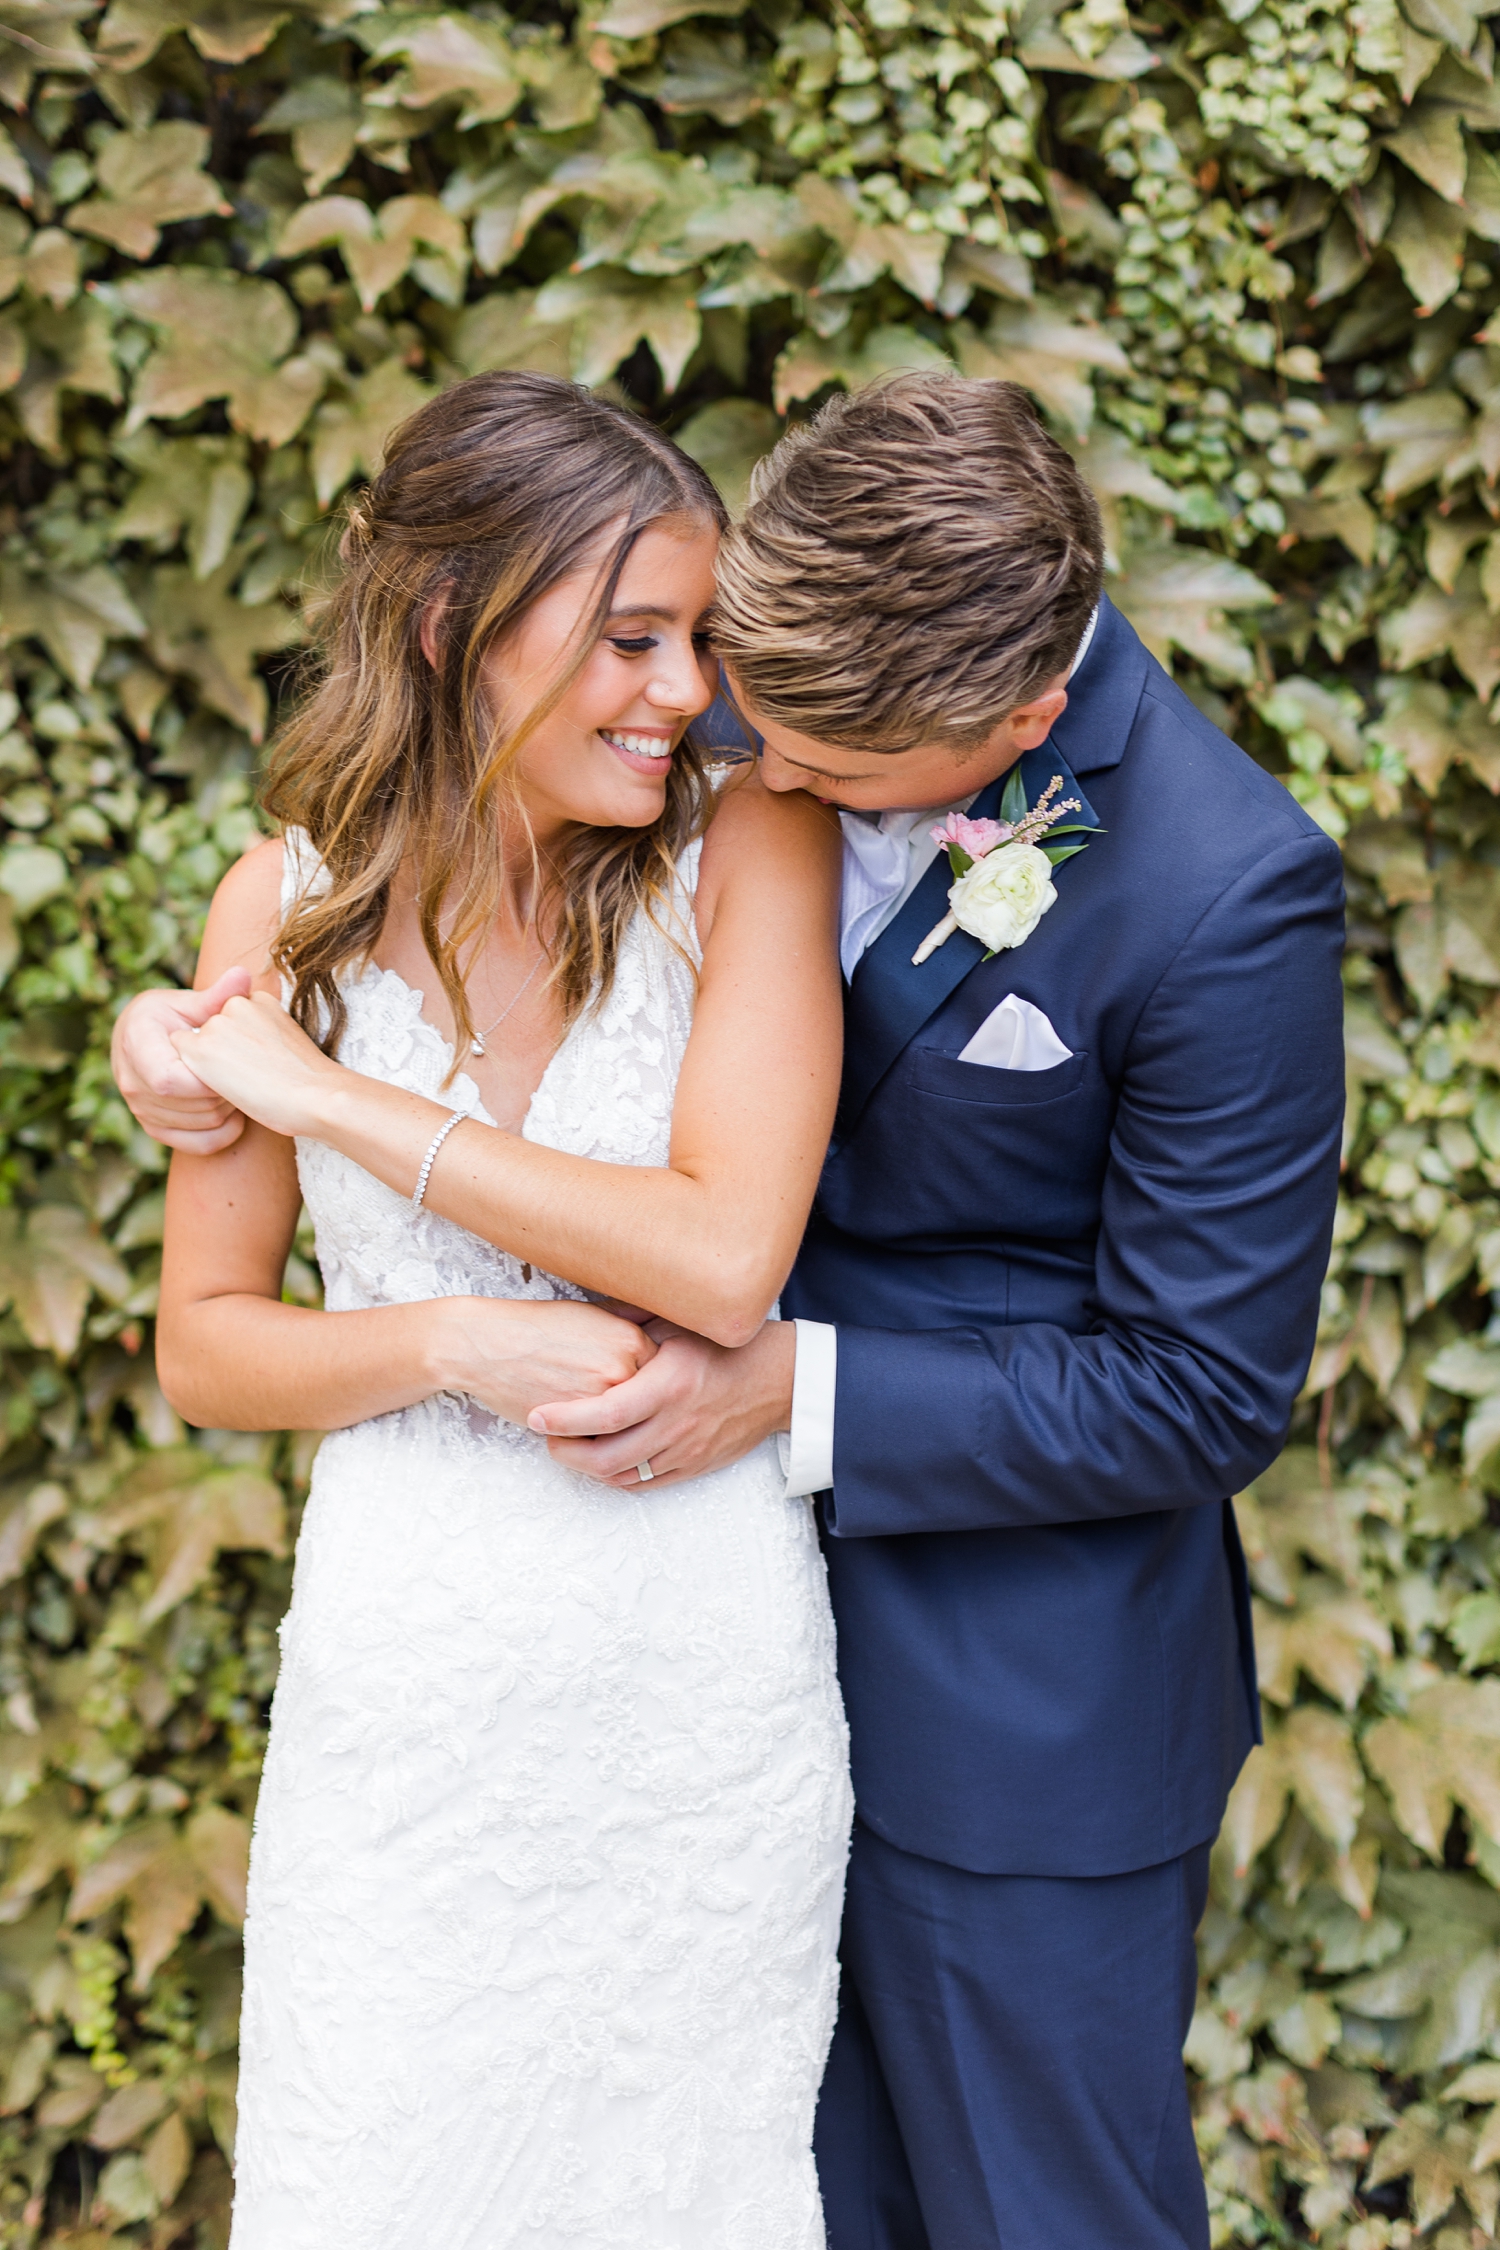 Luke kisses his new bride's shoulder softly in downtown Des Moines | CB Studio